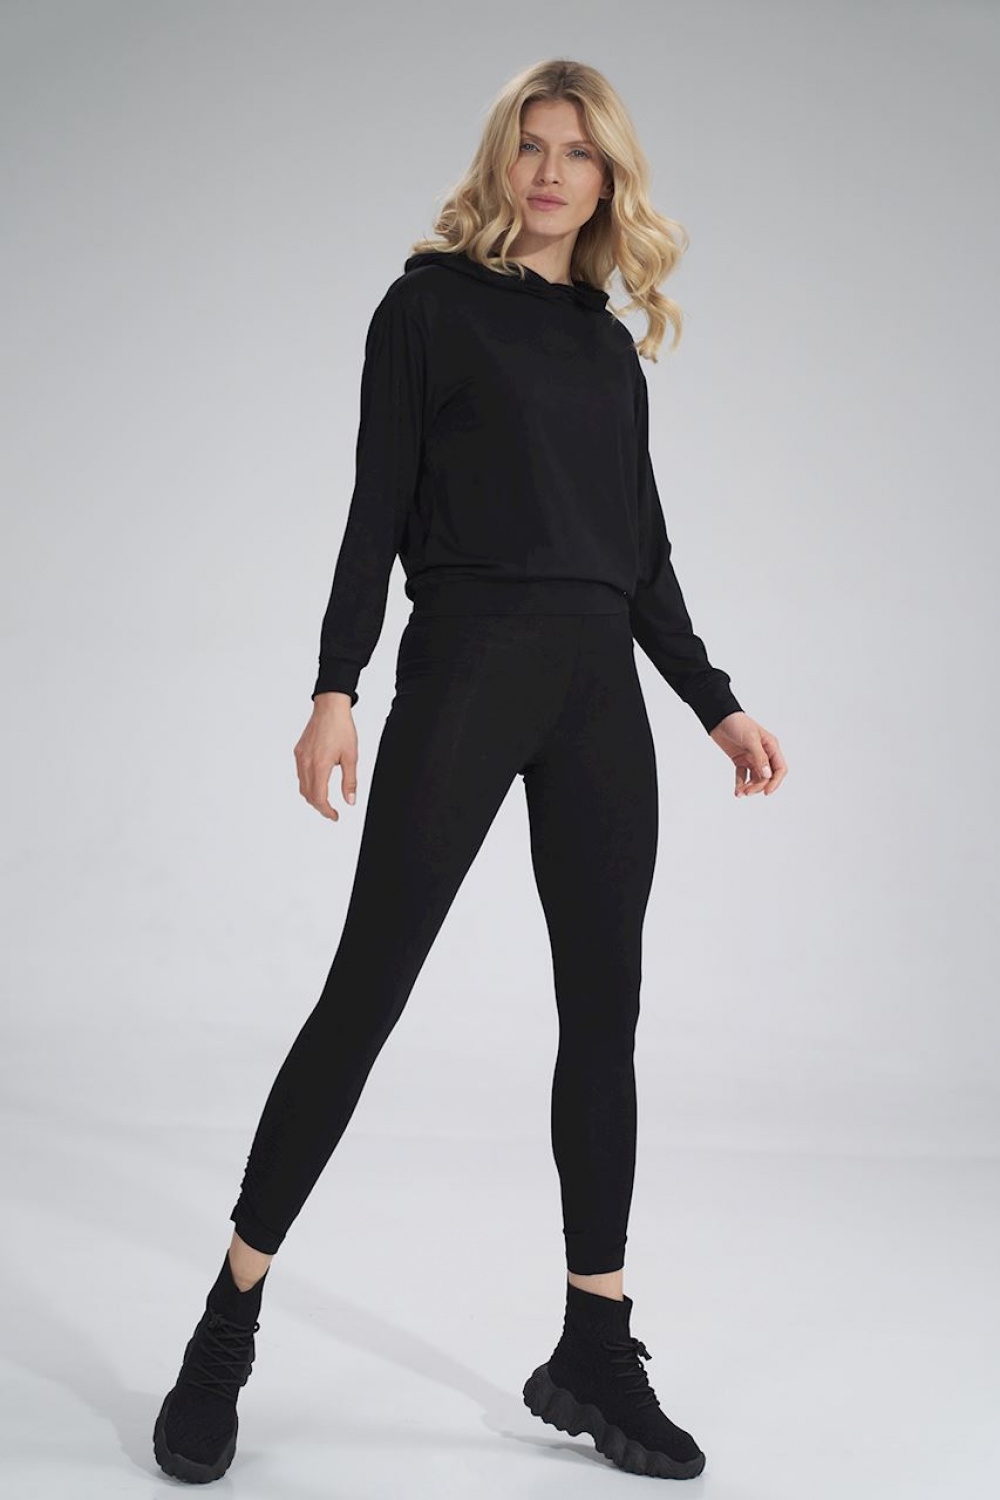 Long leggings model 155965 Figl black Ladies